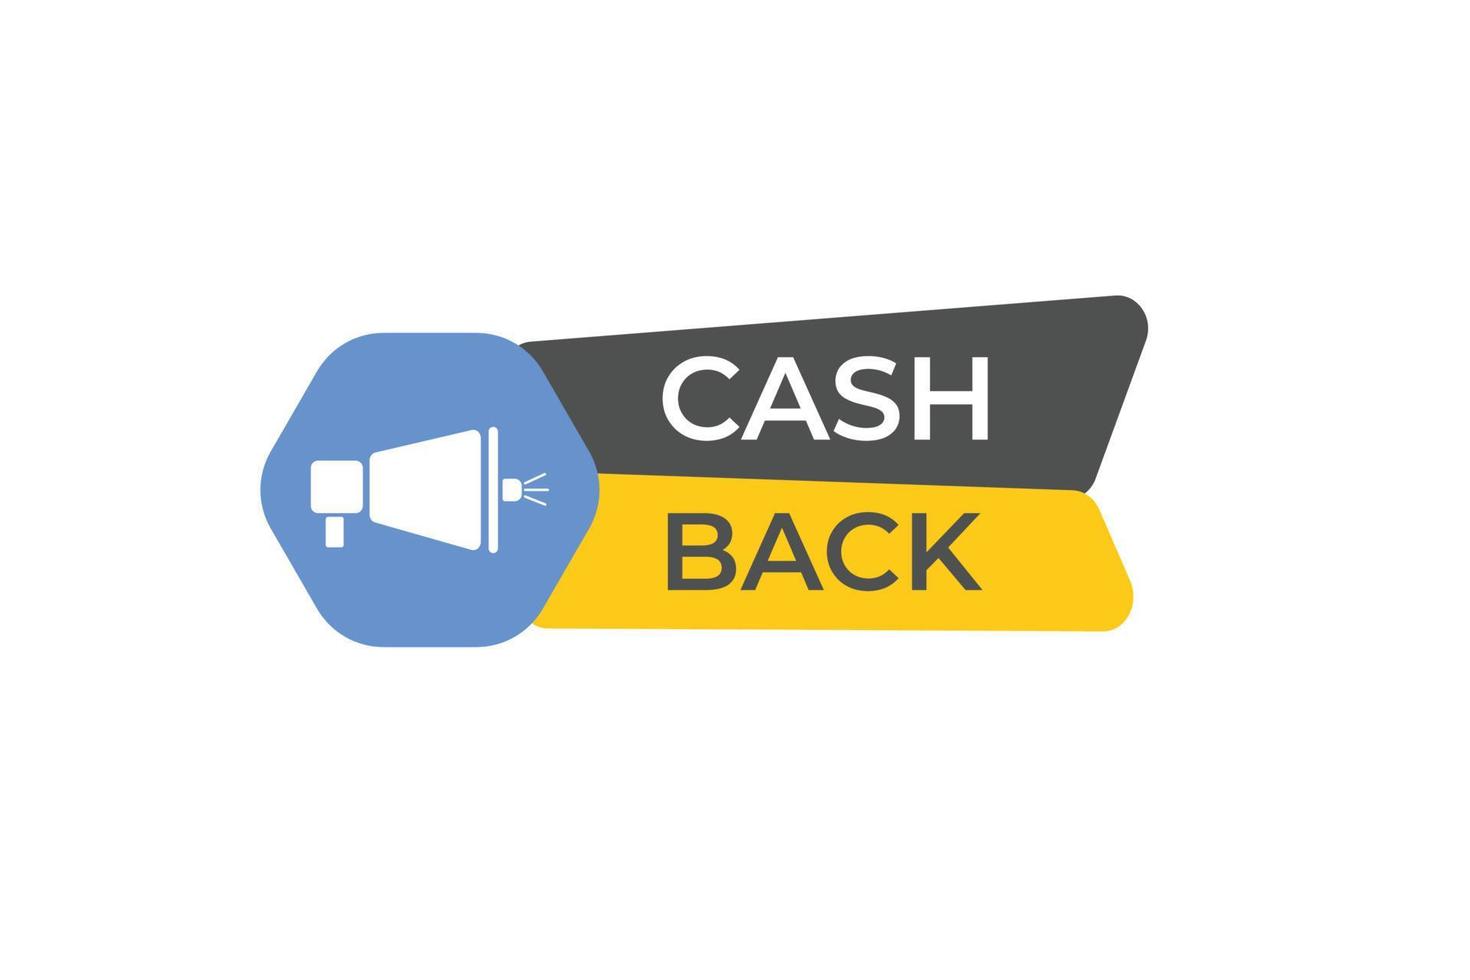 Cash Back Button. web template, Speech Bubble, Banner Label Cash Back. sign icon Vector illustration